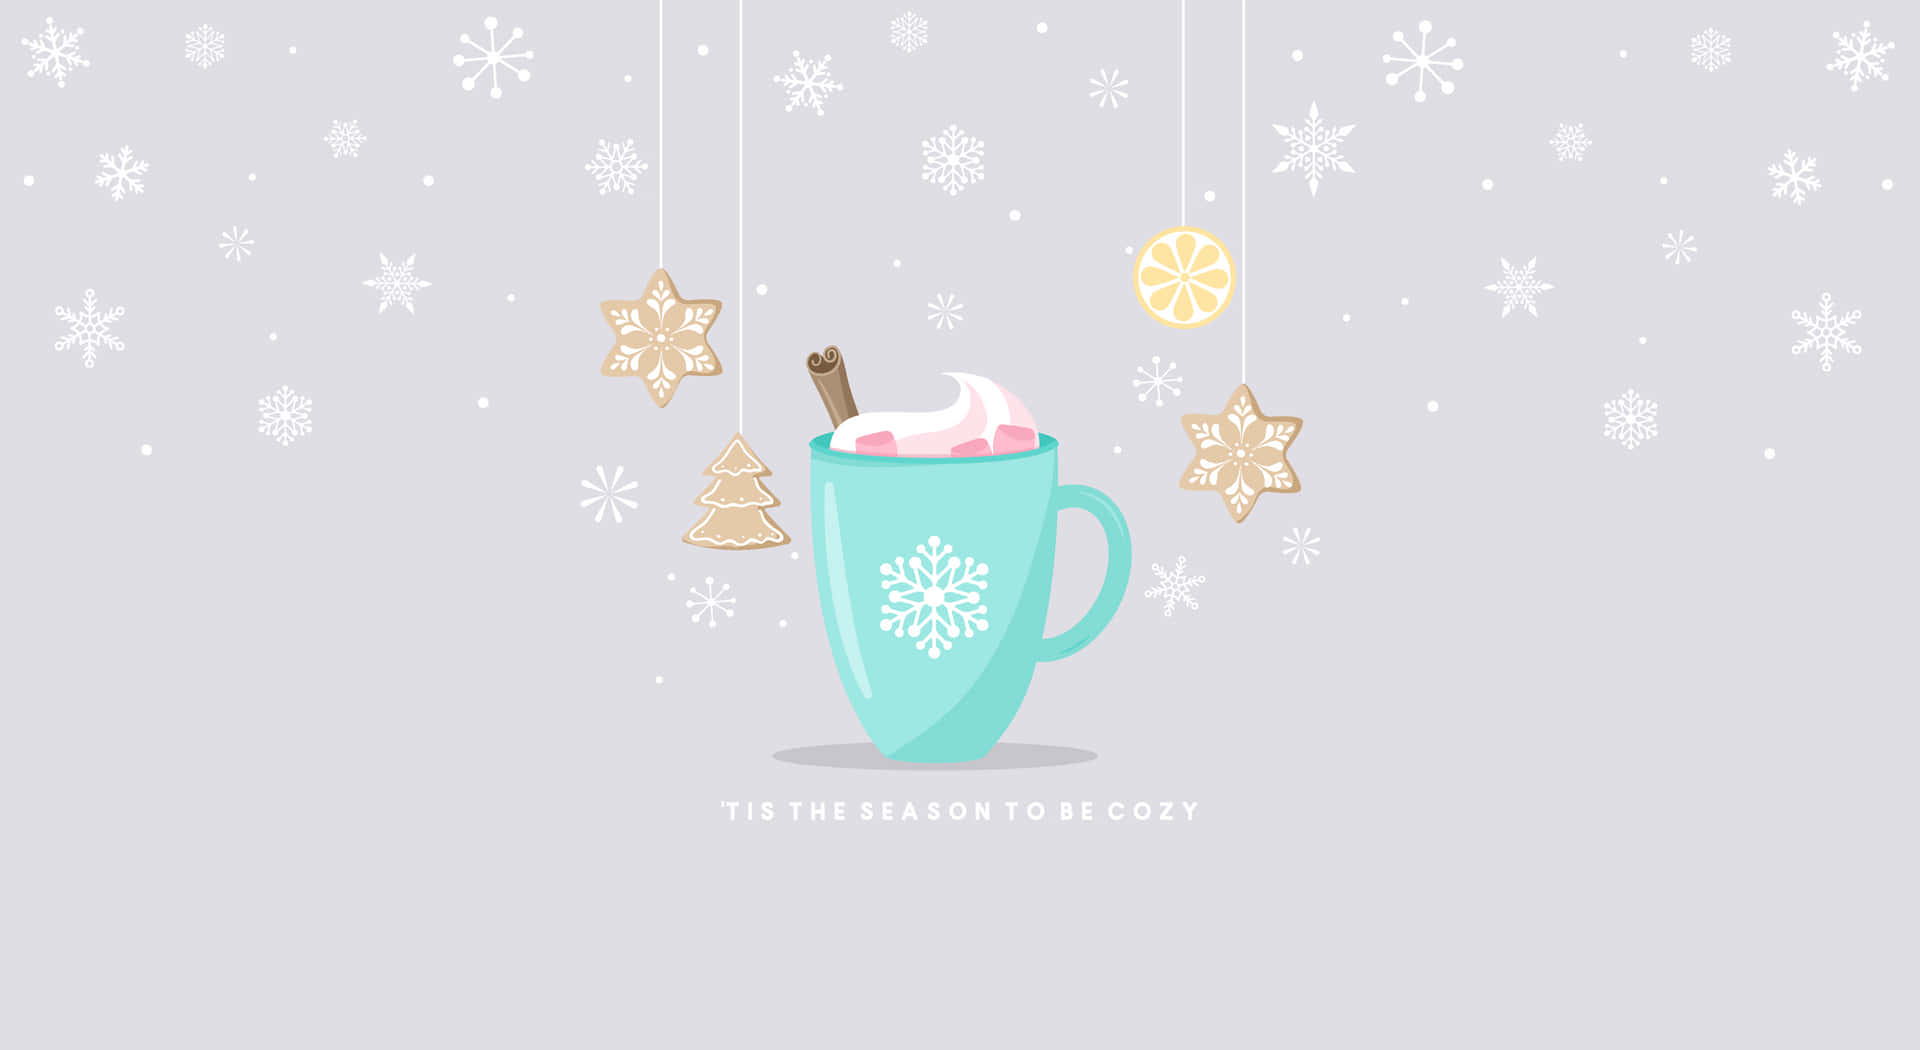 Cozy Winter Art Cup And Snowflakes Desktop Wallpaper